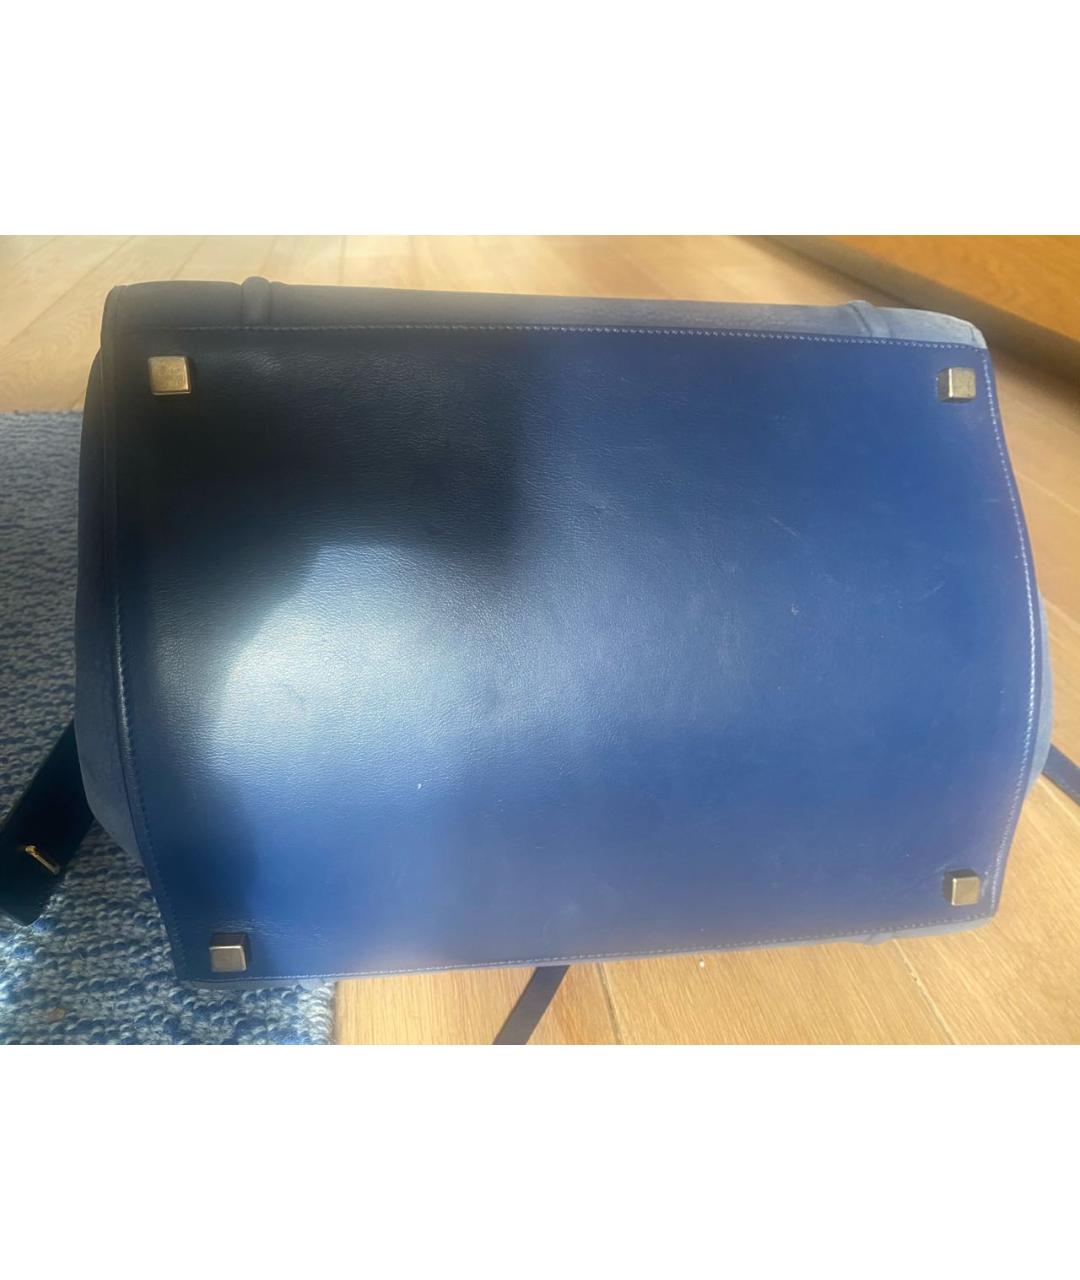 CELINE PRE-OWNED Синяя кожаная сумка с короткими ручками, фото 3